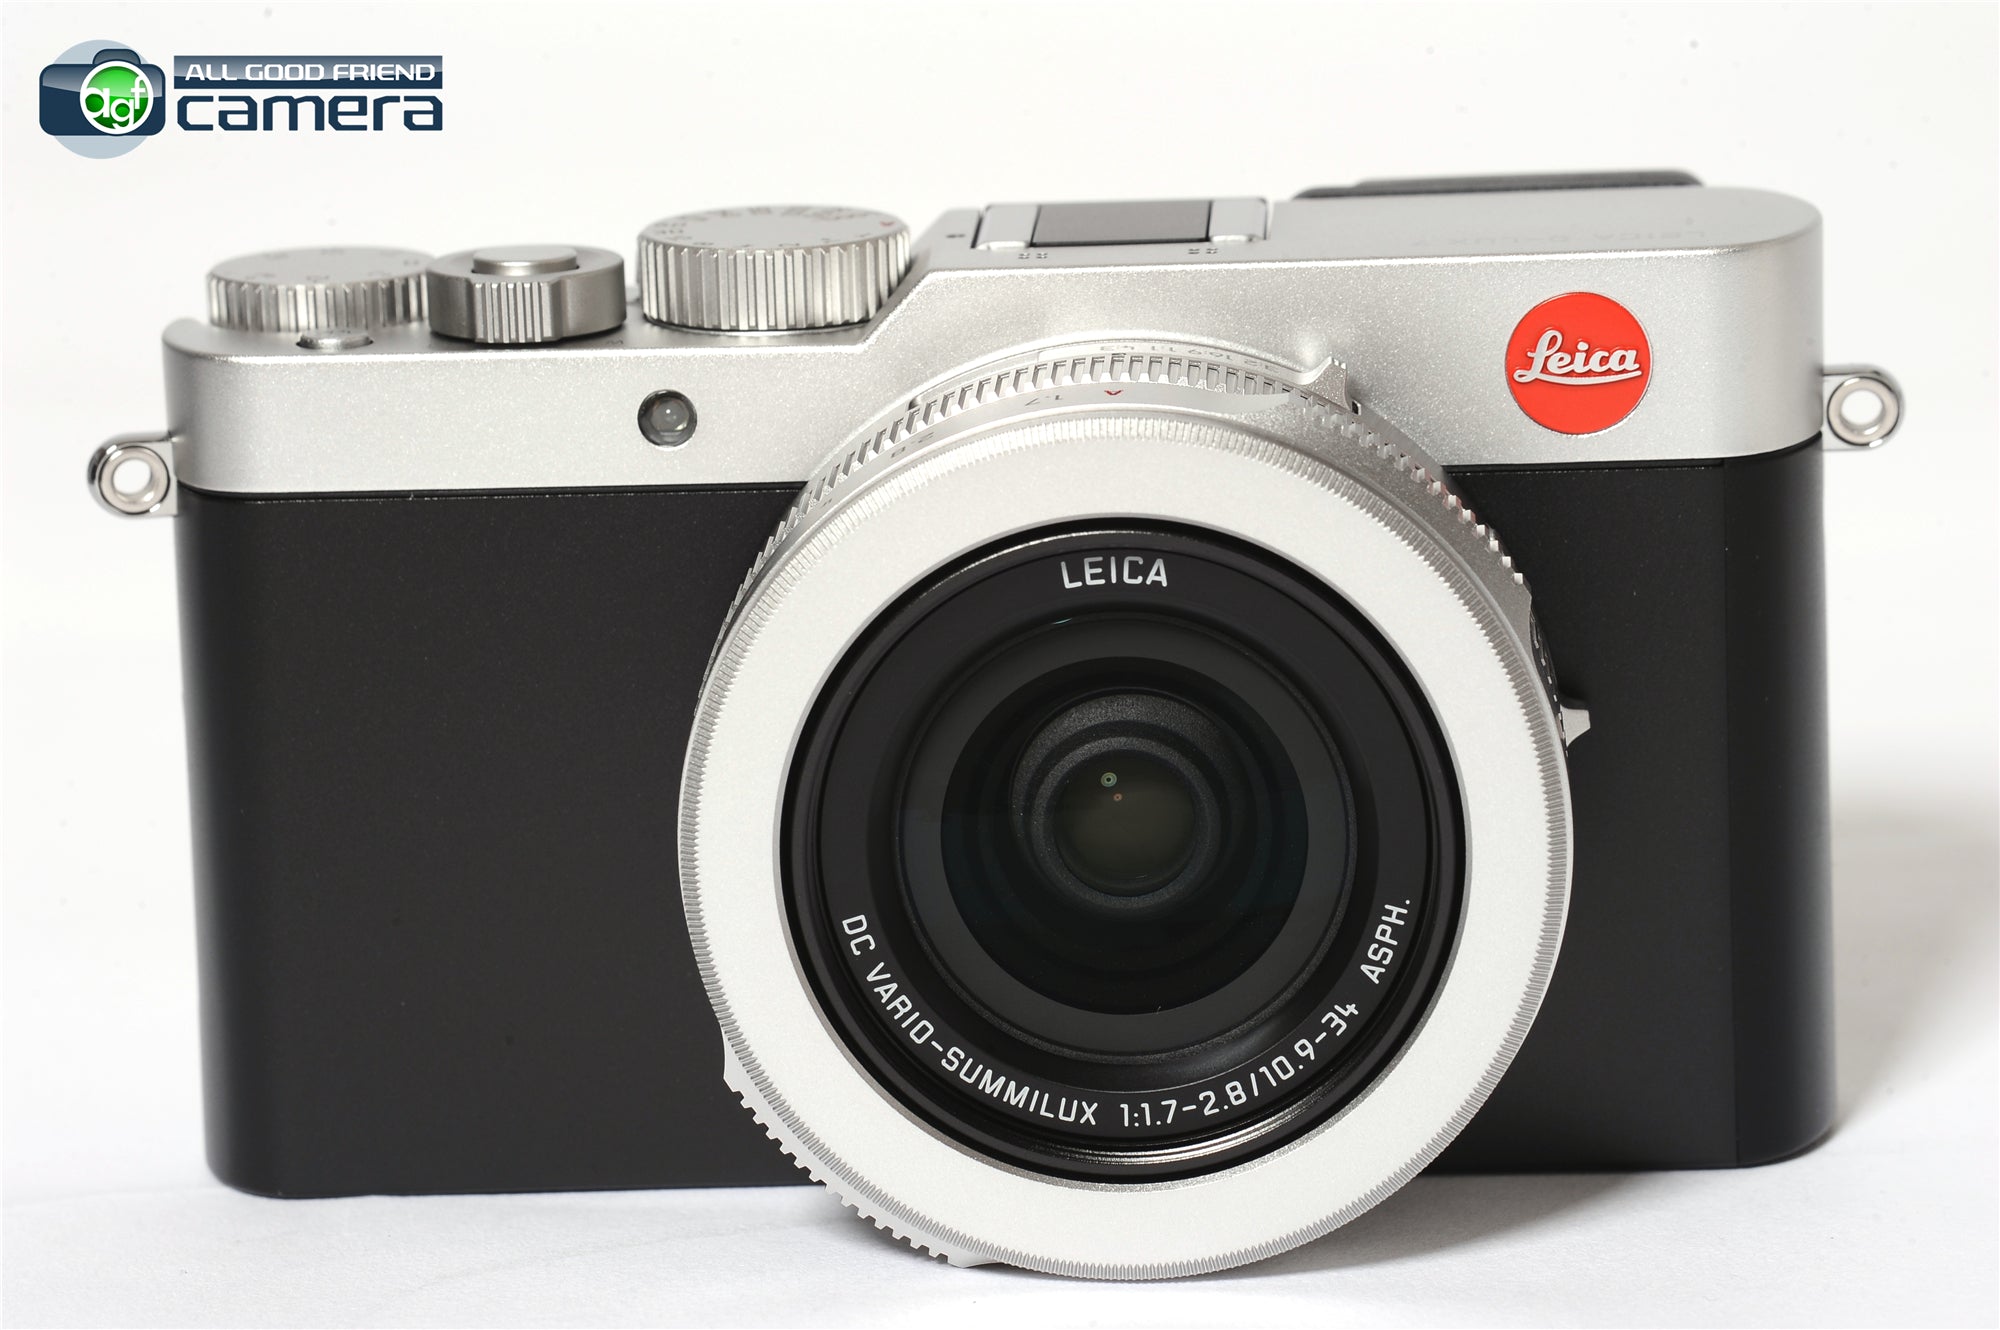 Leica D-LUX 7 Digital Camera With Vario-summilux 24-70mm -  Finland